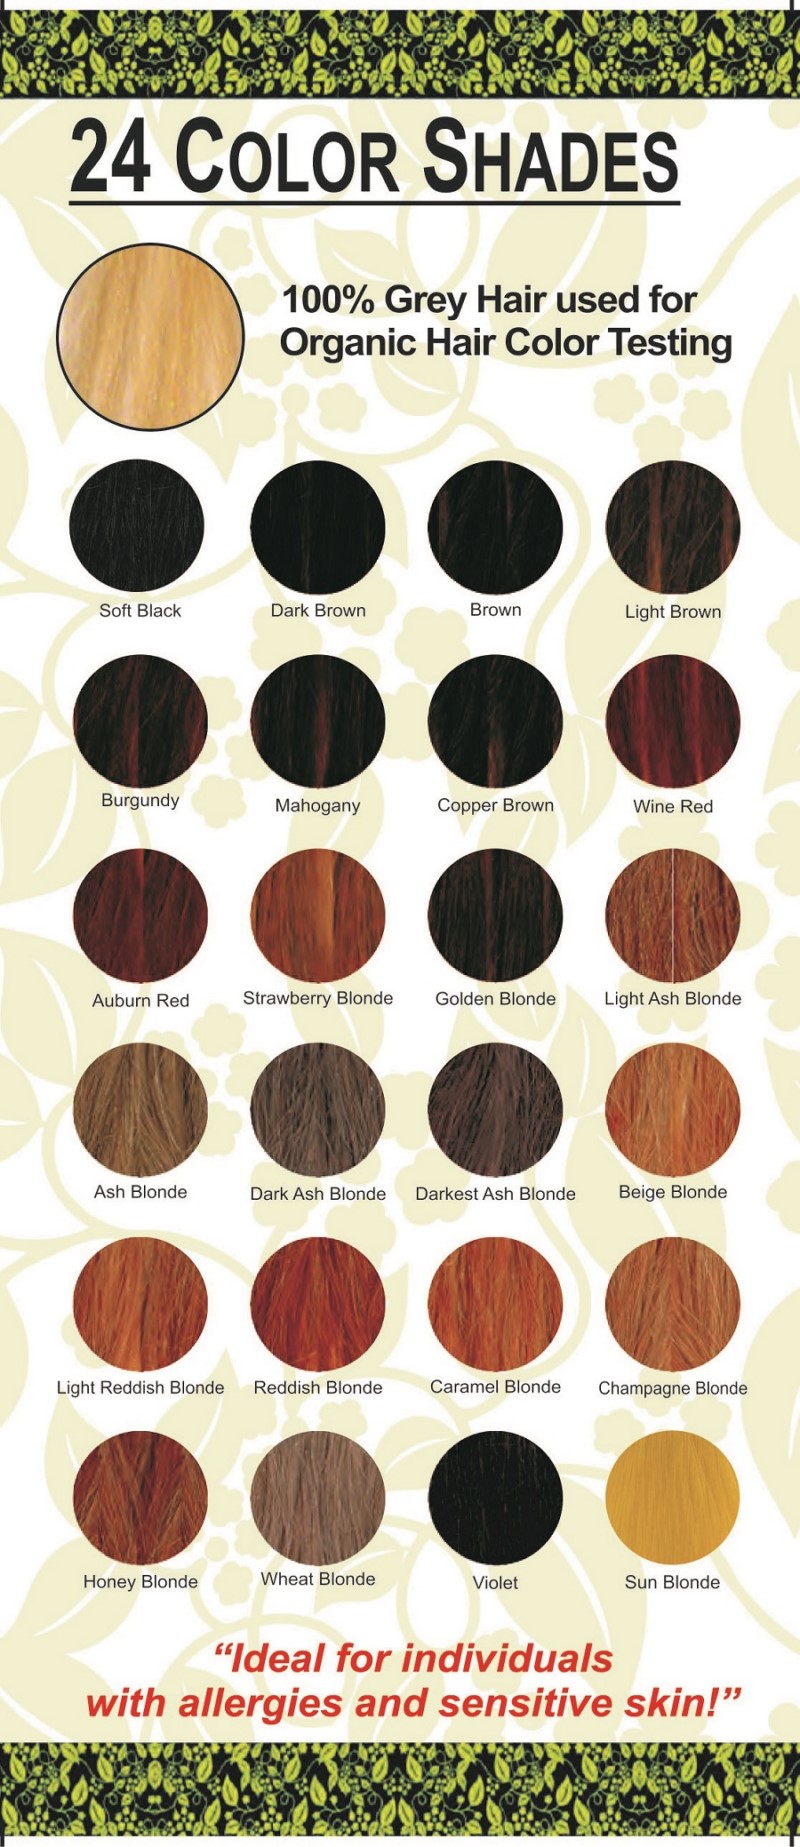 Radico + hair colour + Certified Organic Hair Color Dye - Red Shades + Burgandy (100 gm) + discount